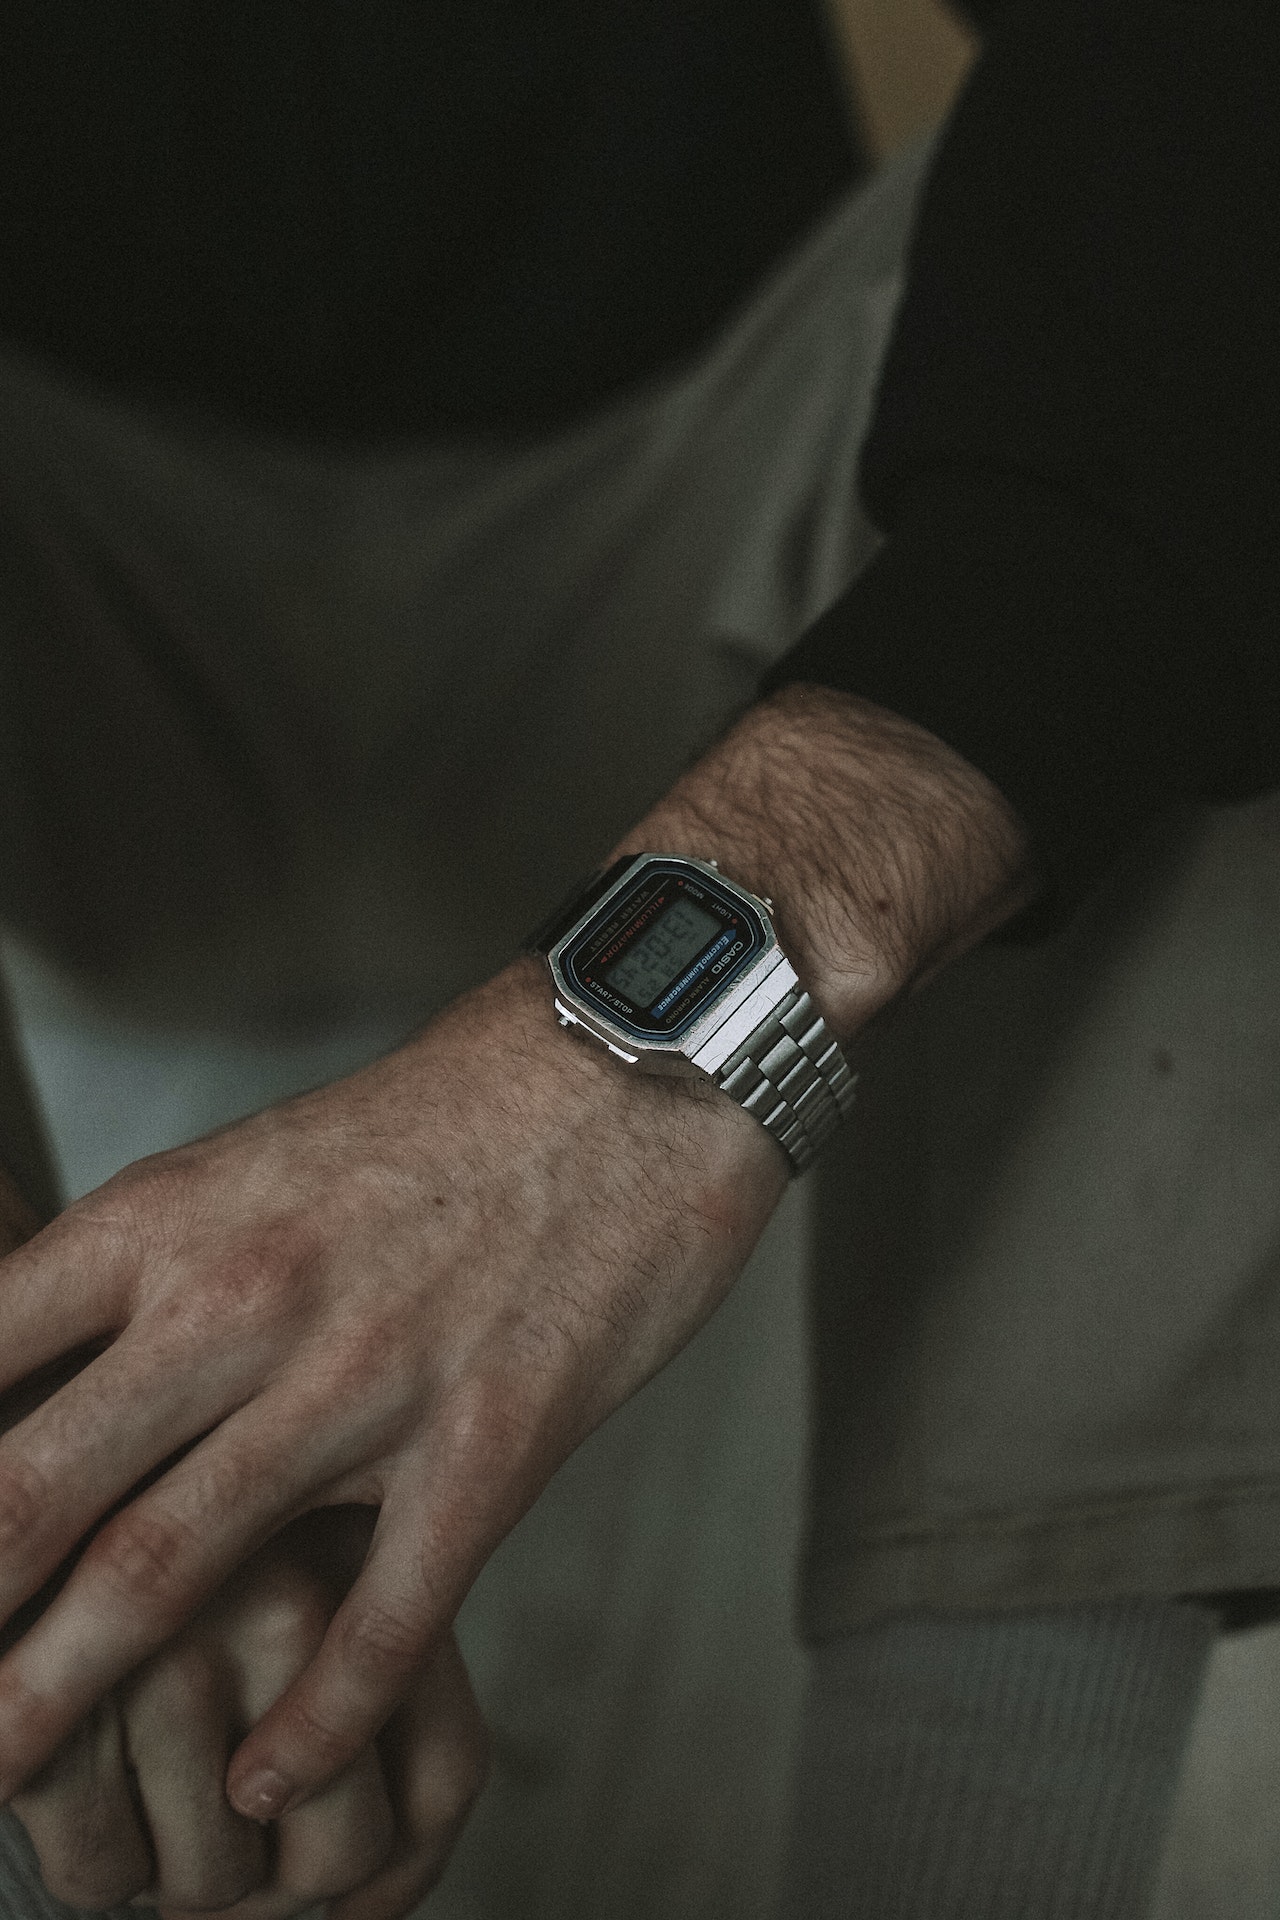 A close up of a digital wristwatch